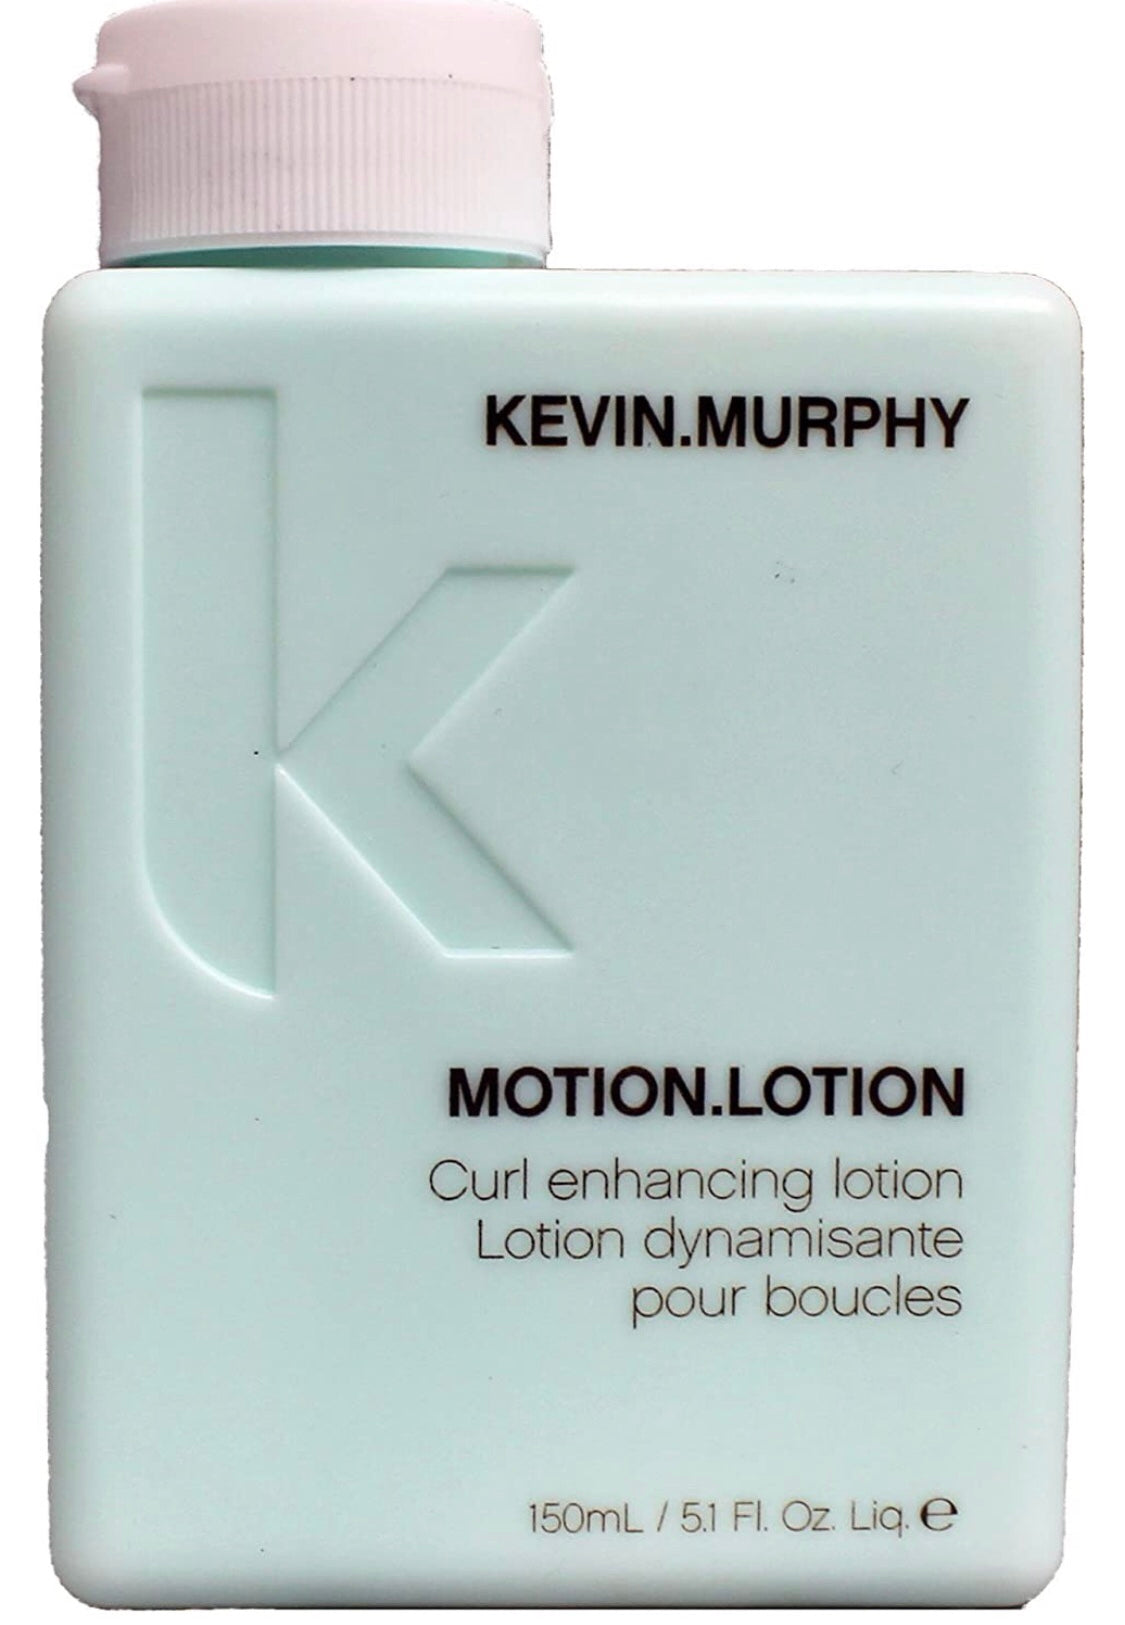 Kevin.Murphy - Motion.Lotion 5.1 fl. oz. / 150 ml